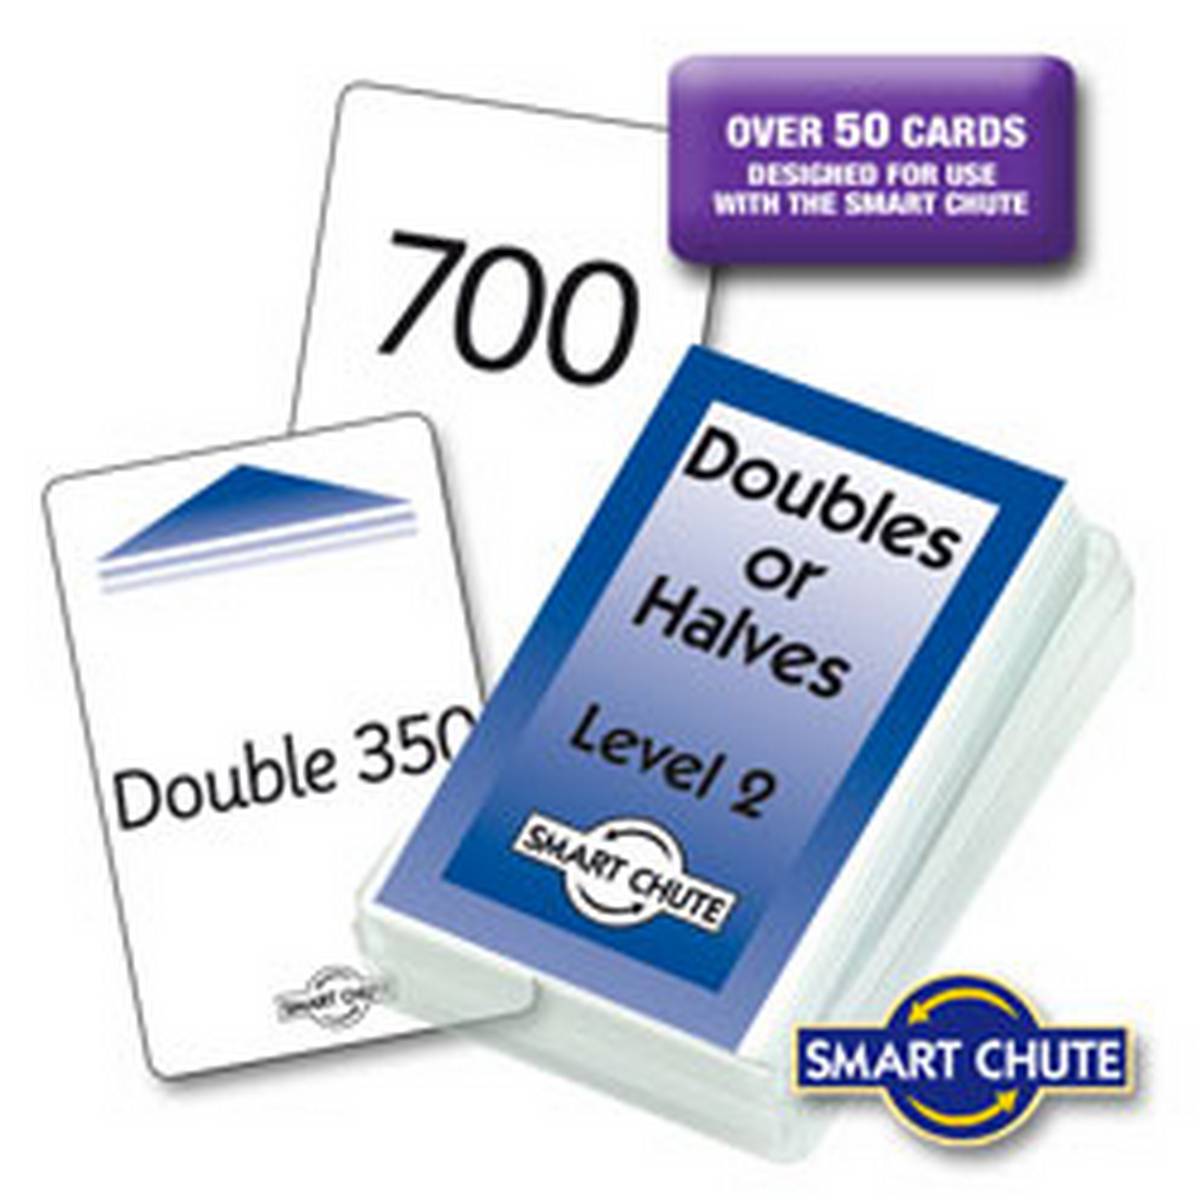 Double / Halves Chute Cards - Level 2